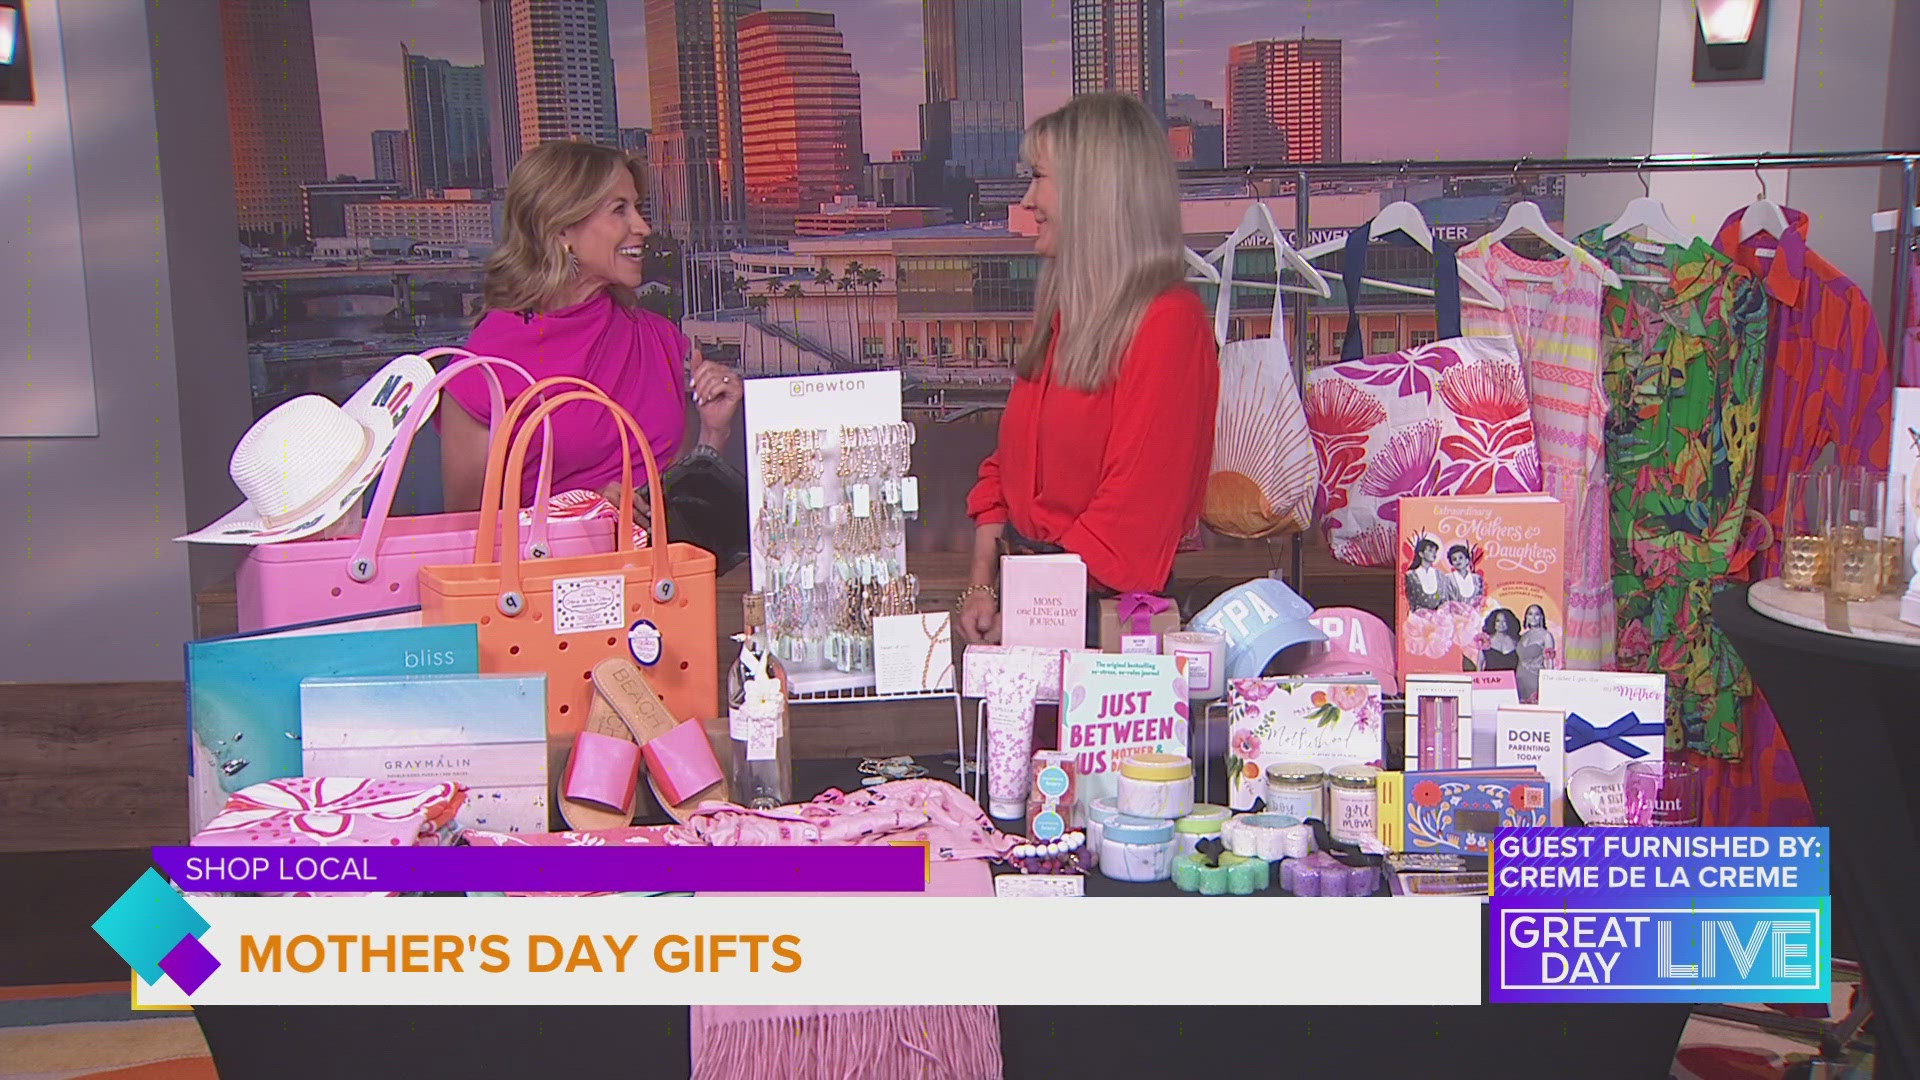 South Tampa boutique Crème de la Crème shares unique and special gifts for Mother’s Day.